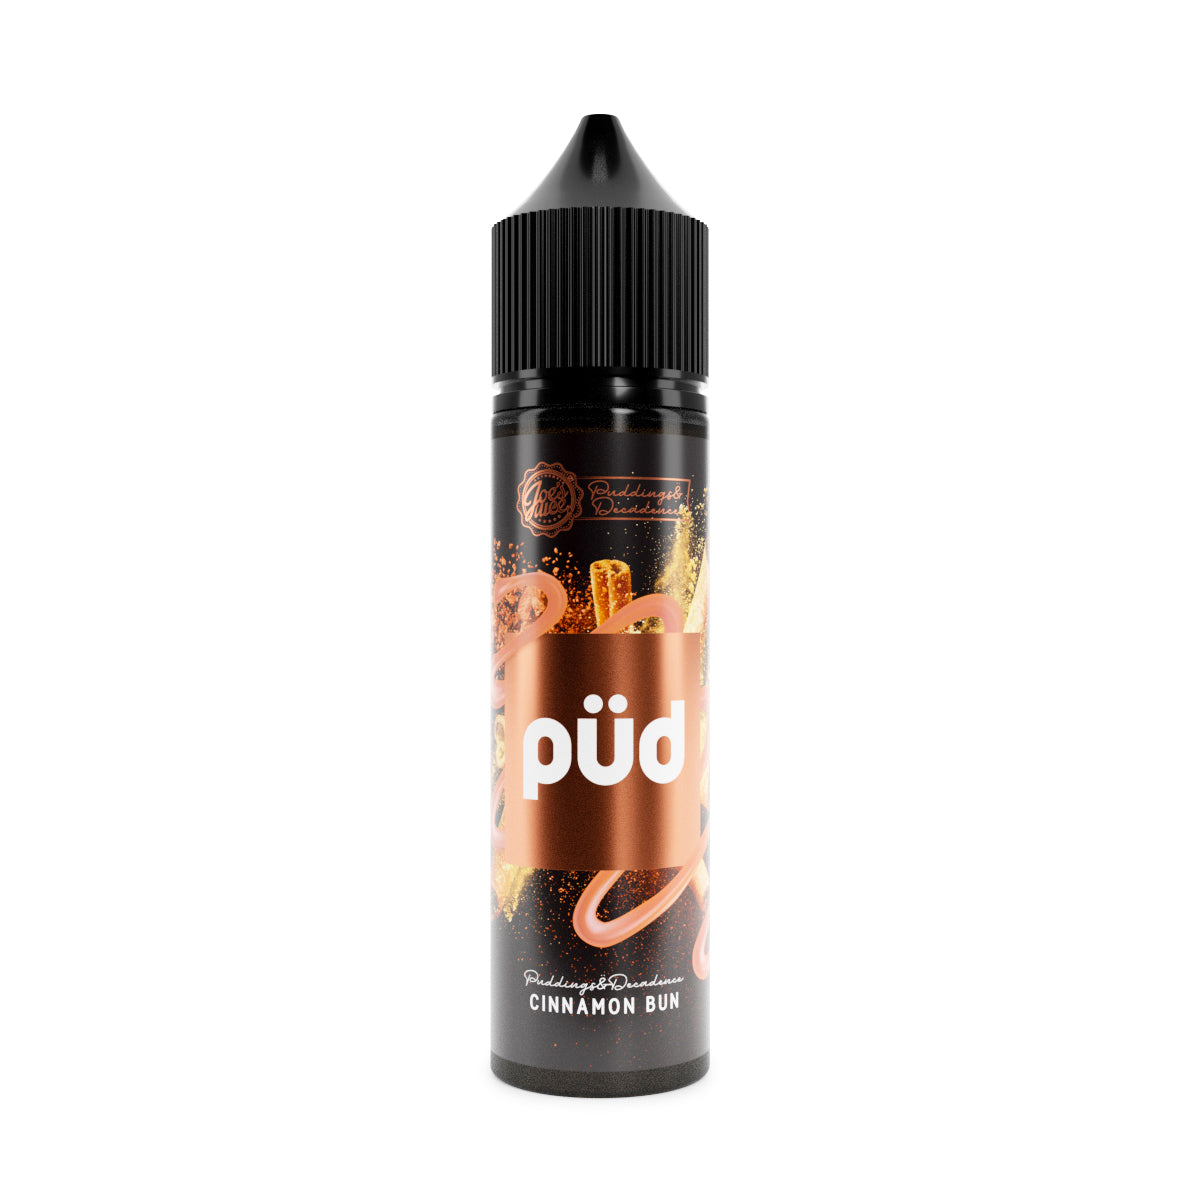 Pud Pudding & Decadence Cinnamon Bun 0mg 50ml Shortfill E-Liquid